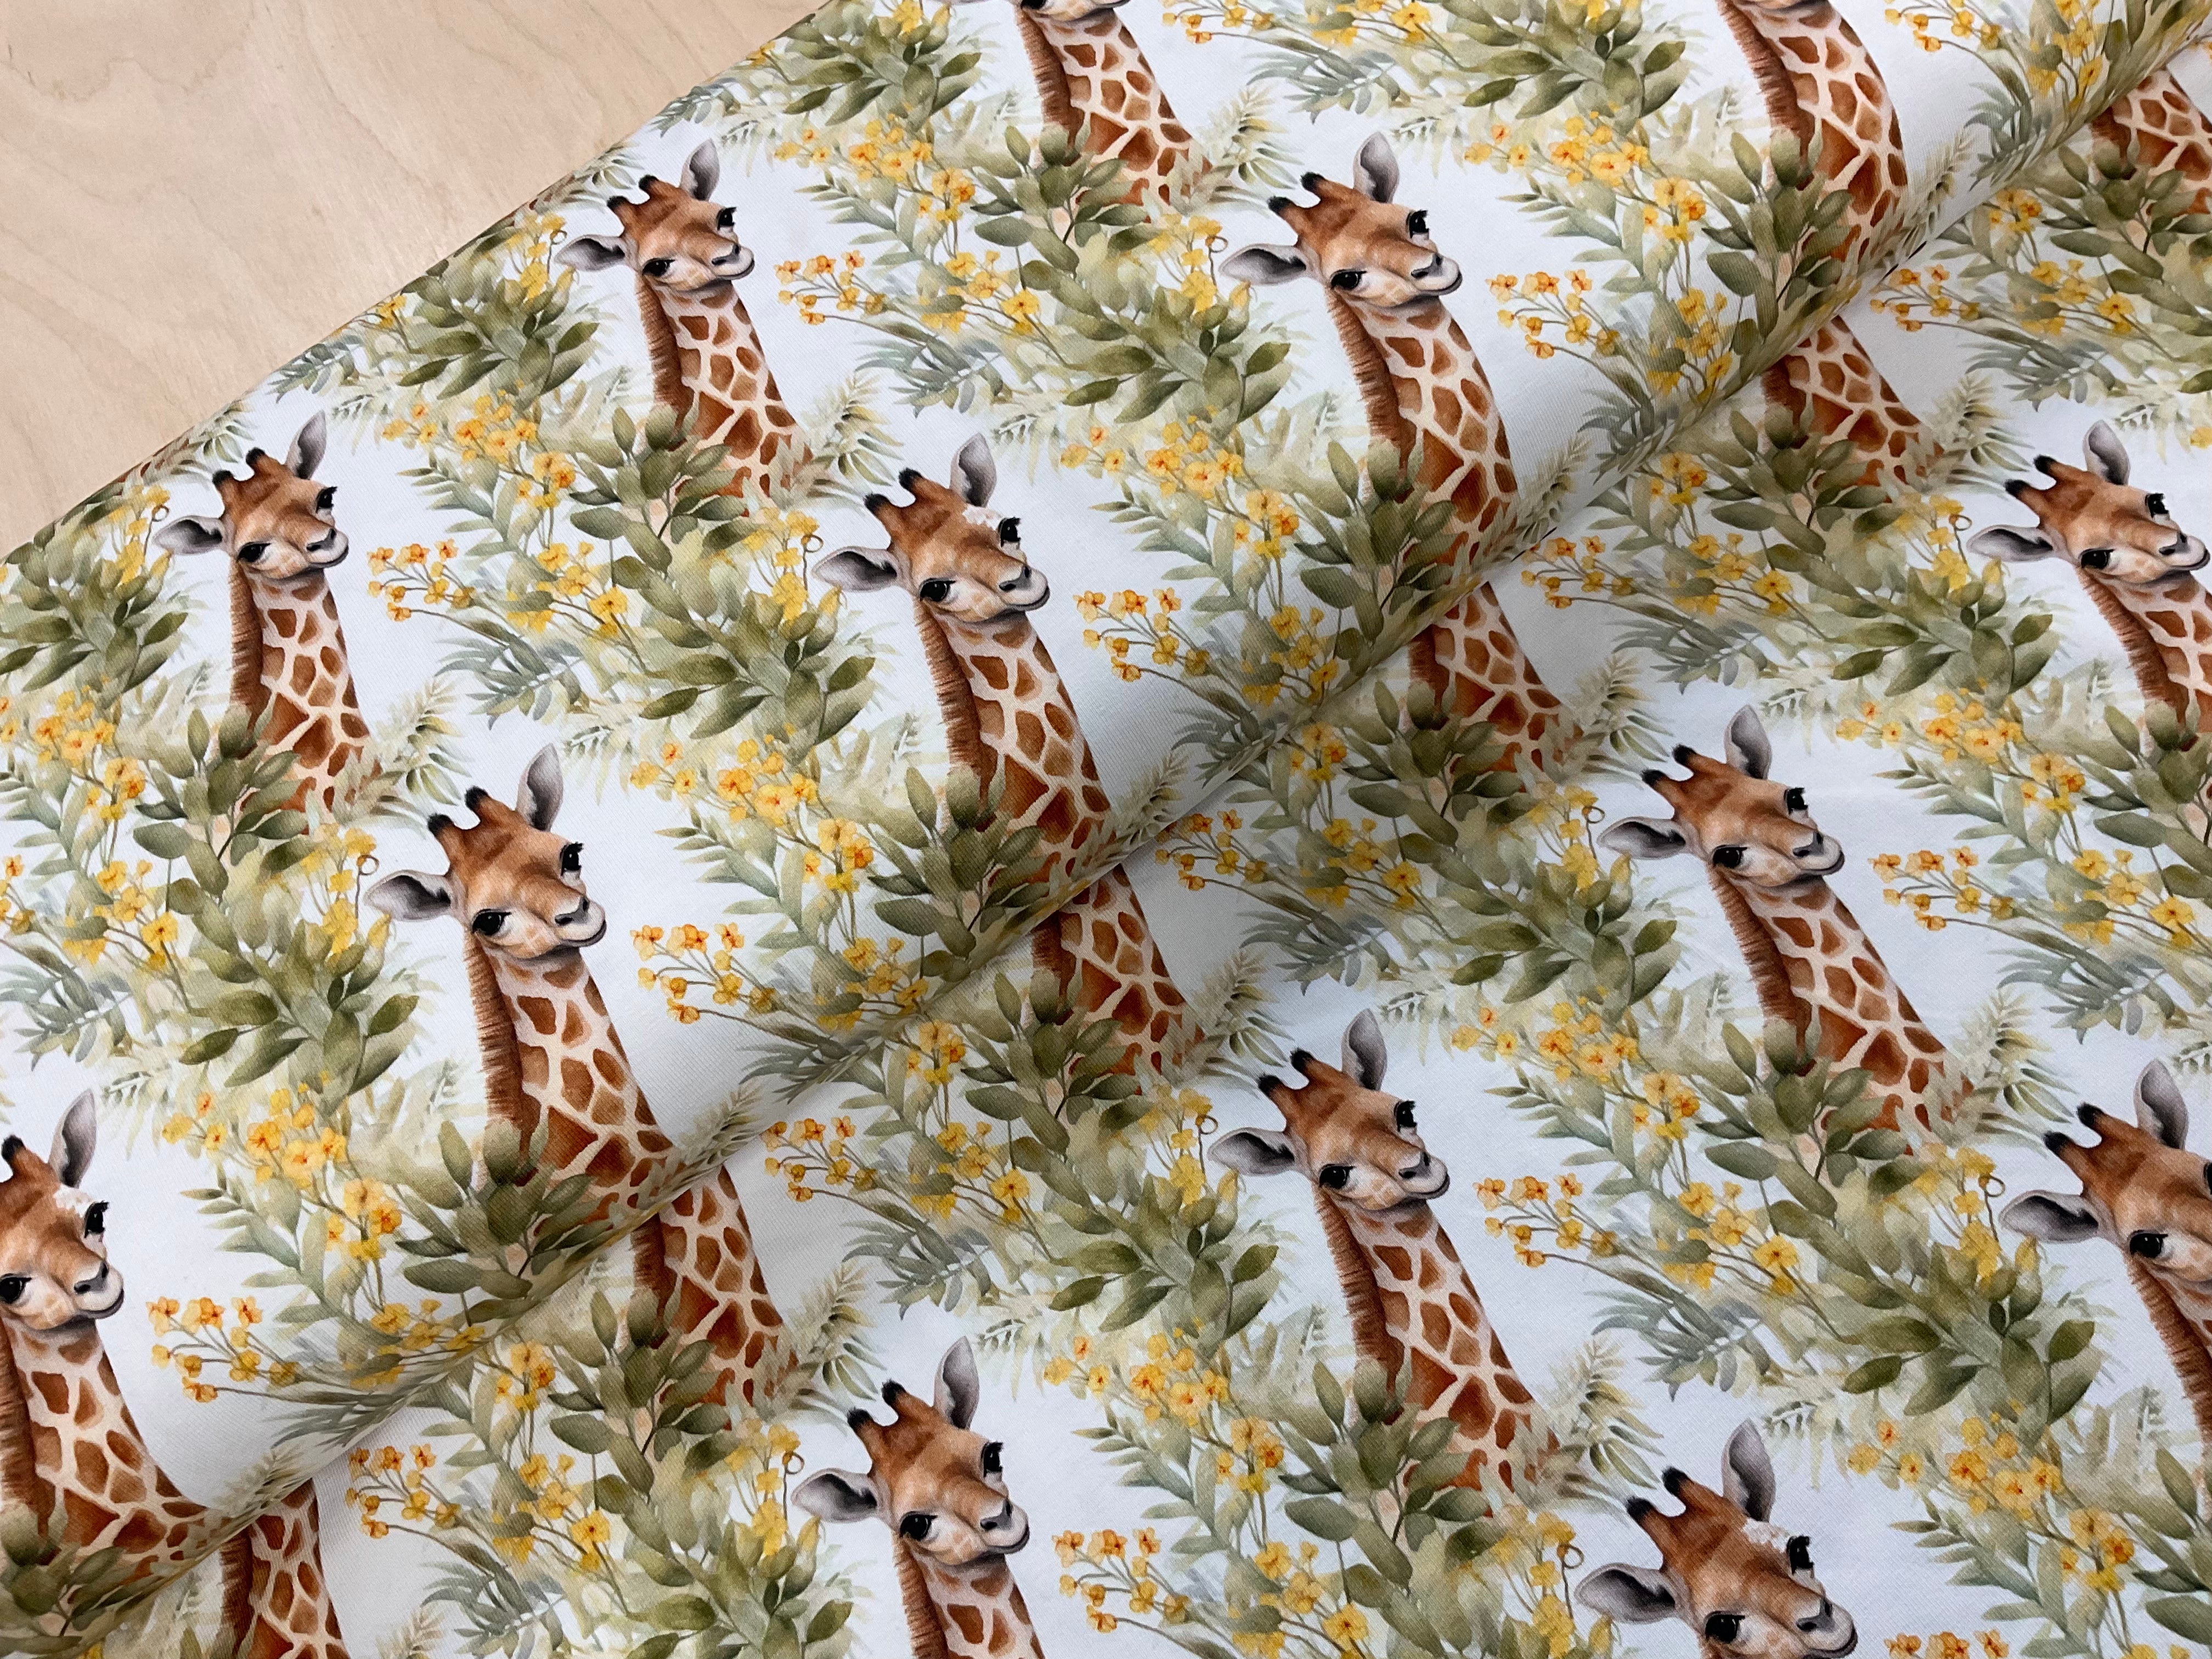 Giraffes and Flowers Cotton Jersey Fabric